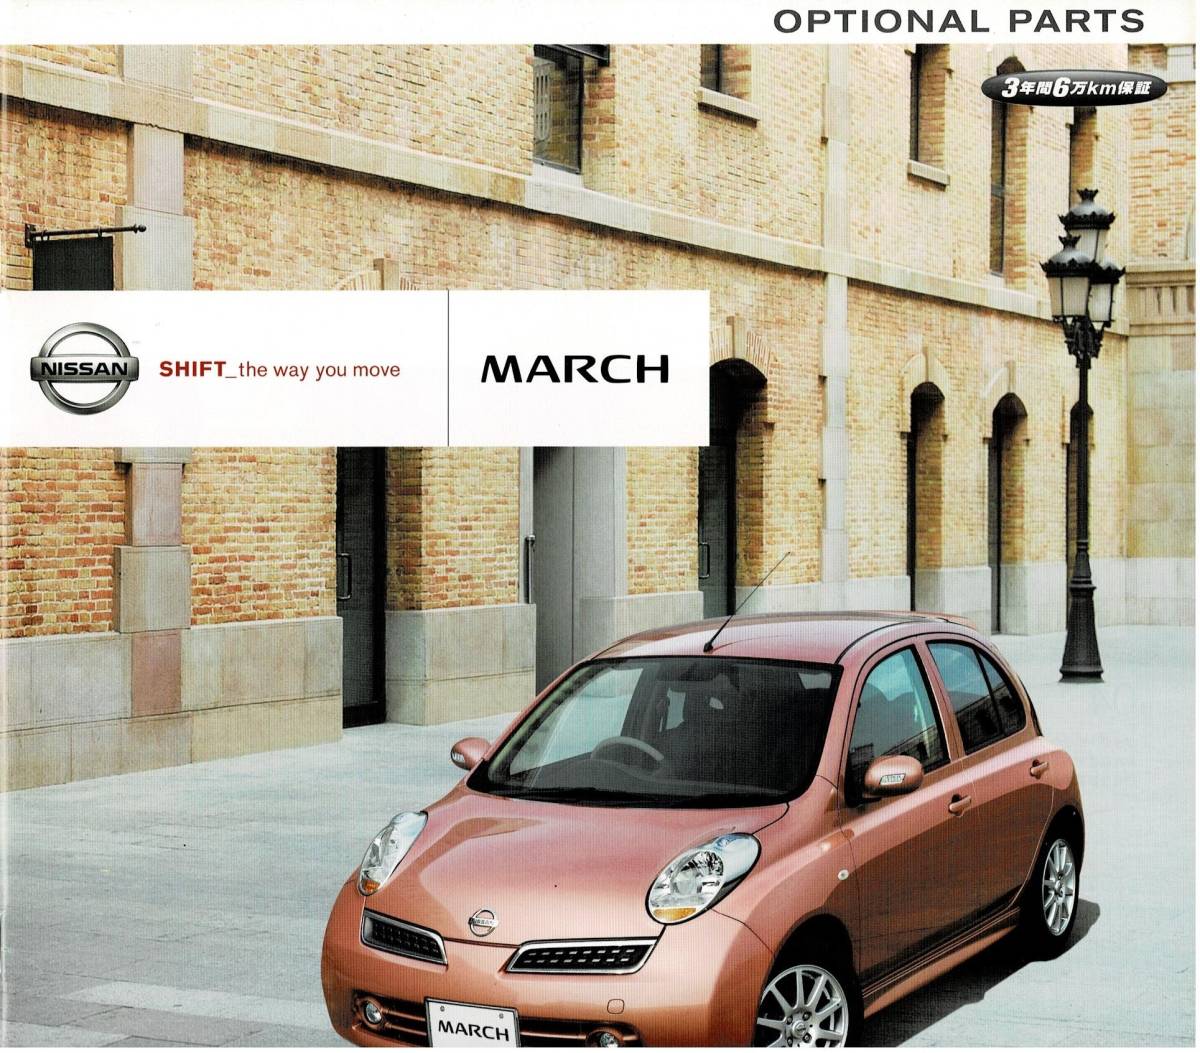  Nissan March каталог +OP 2009 год 8 месяц 